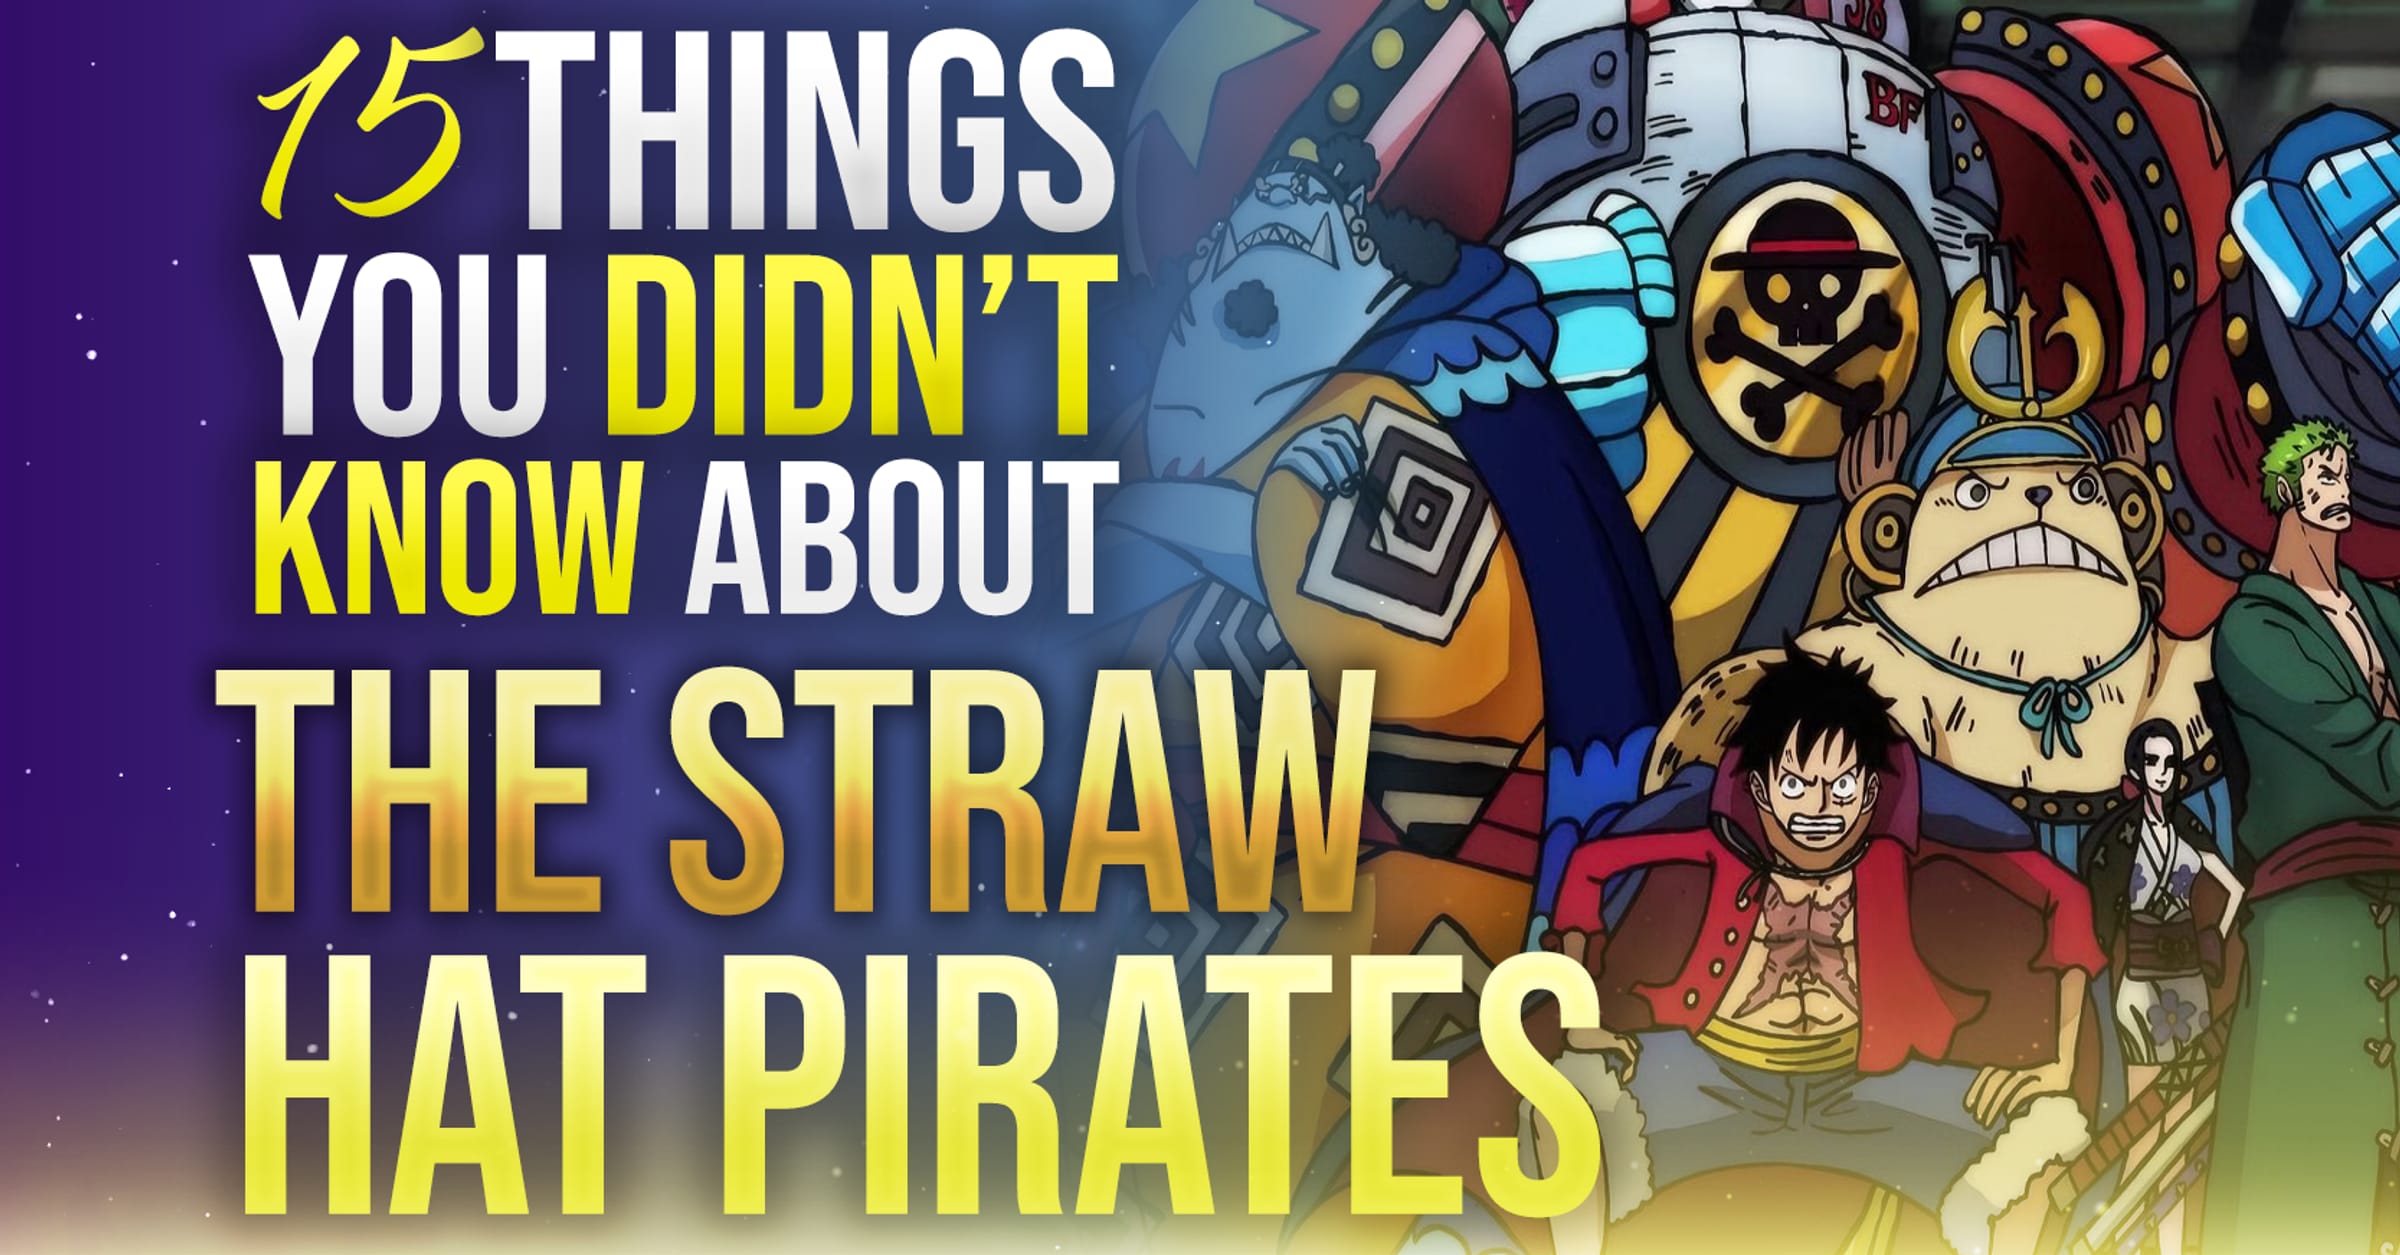 One Piece Reveals a Shocking Straw Hat Betrayal